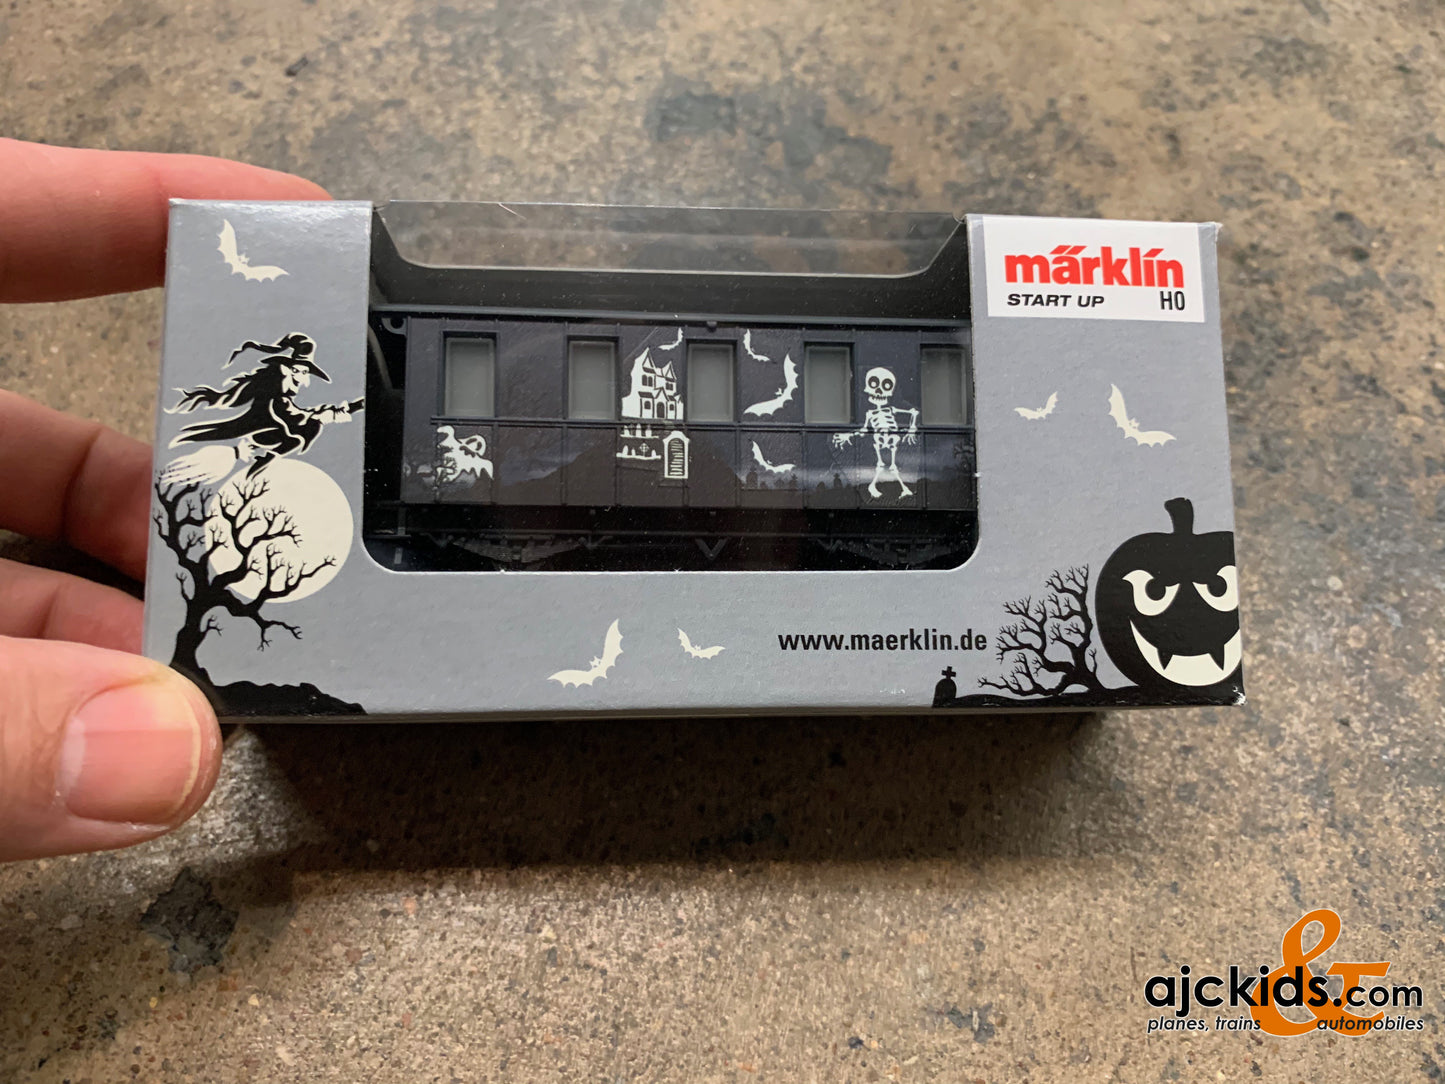 Marklin 48620 - Märklin Start up - Halloween Car (Glow in the Dark)